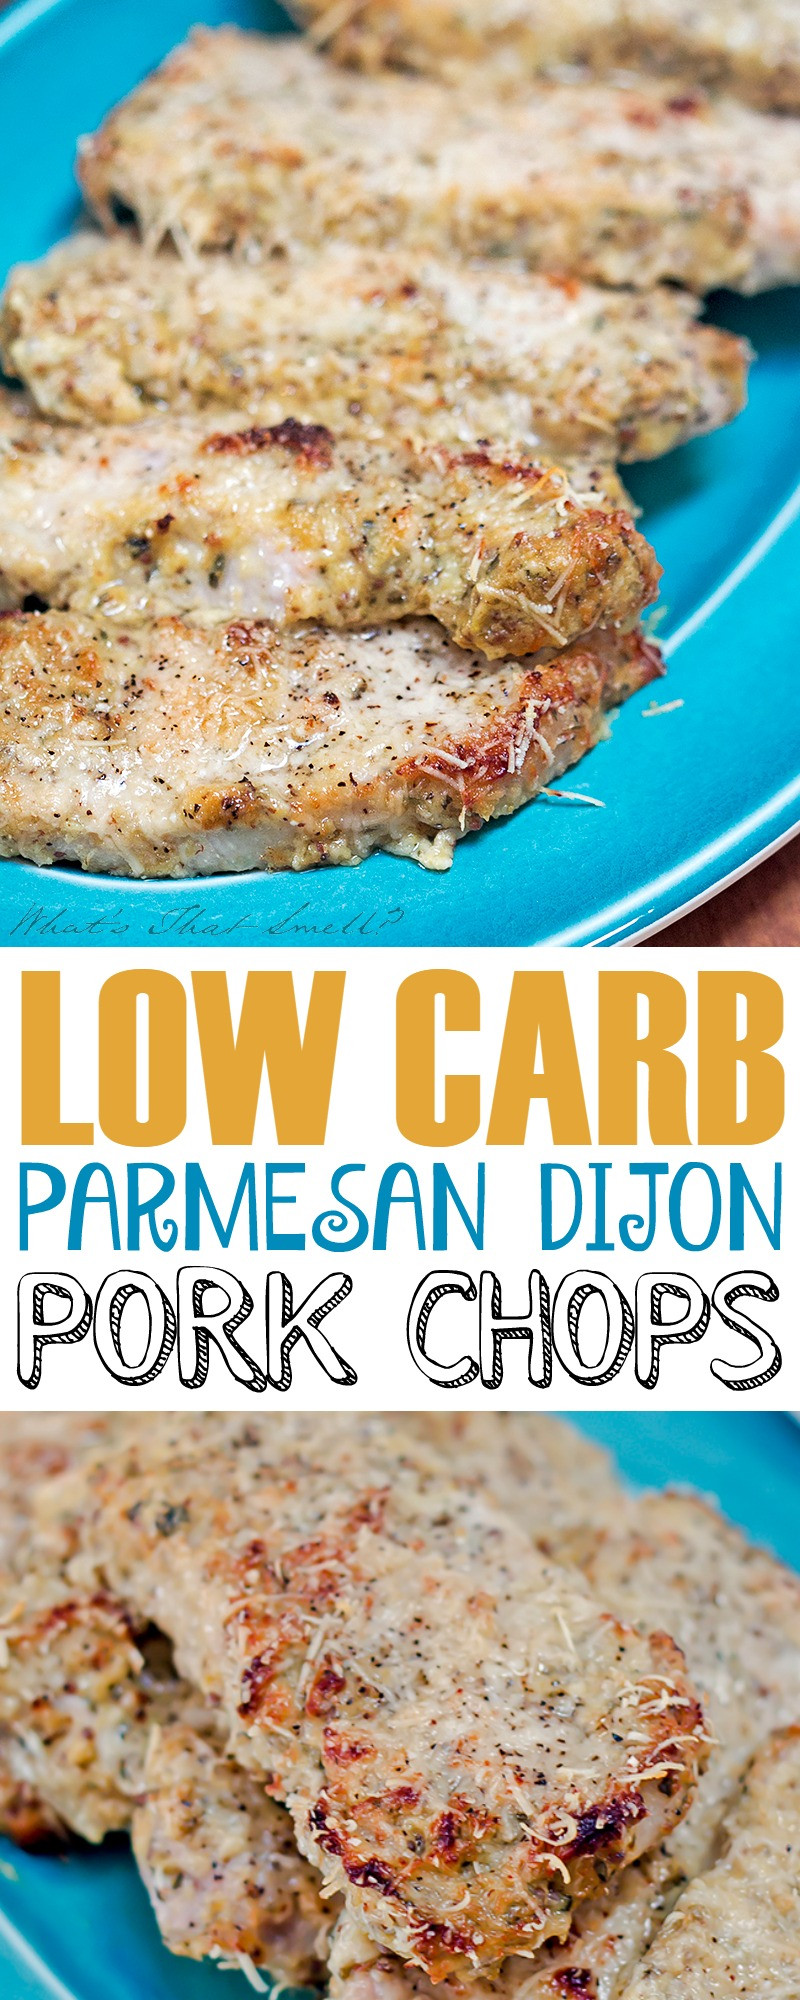 Low Carb Pork Chop Recipes
 Low Carb Parmesan Dijon Pork Chops 730 Sage Street